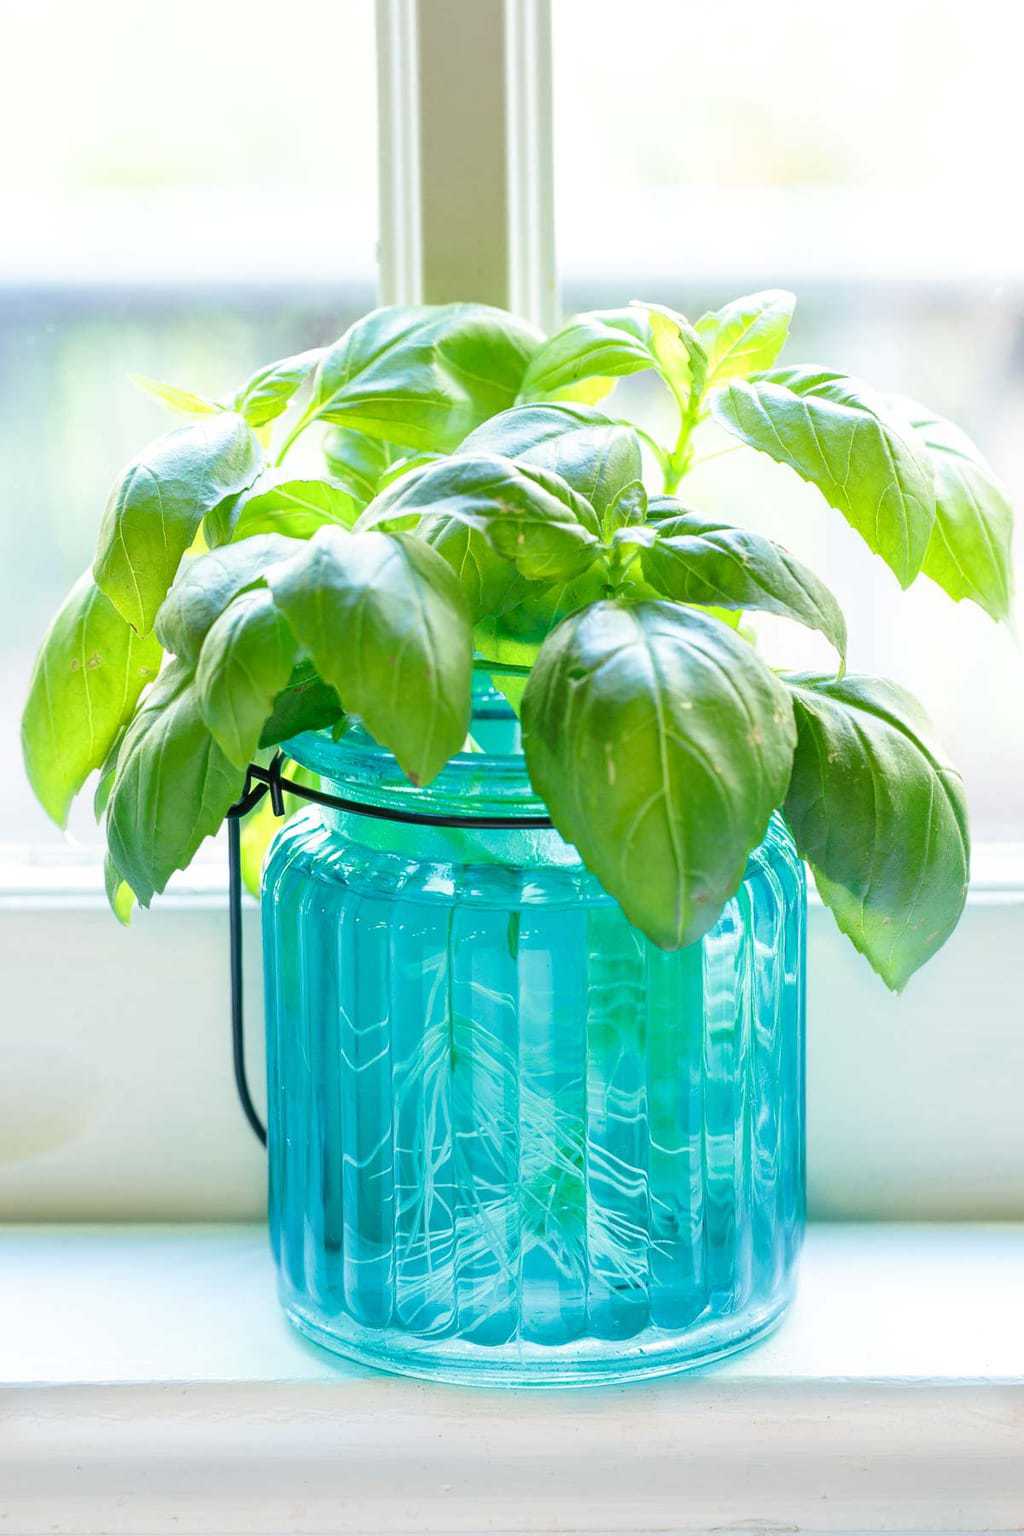 A vertical closeup photo of fresh basil in a blue glass jar on a window sill.